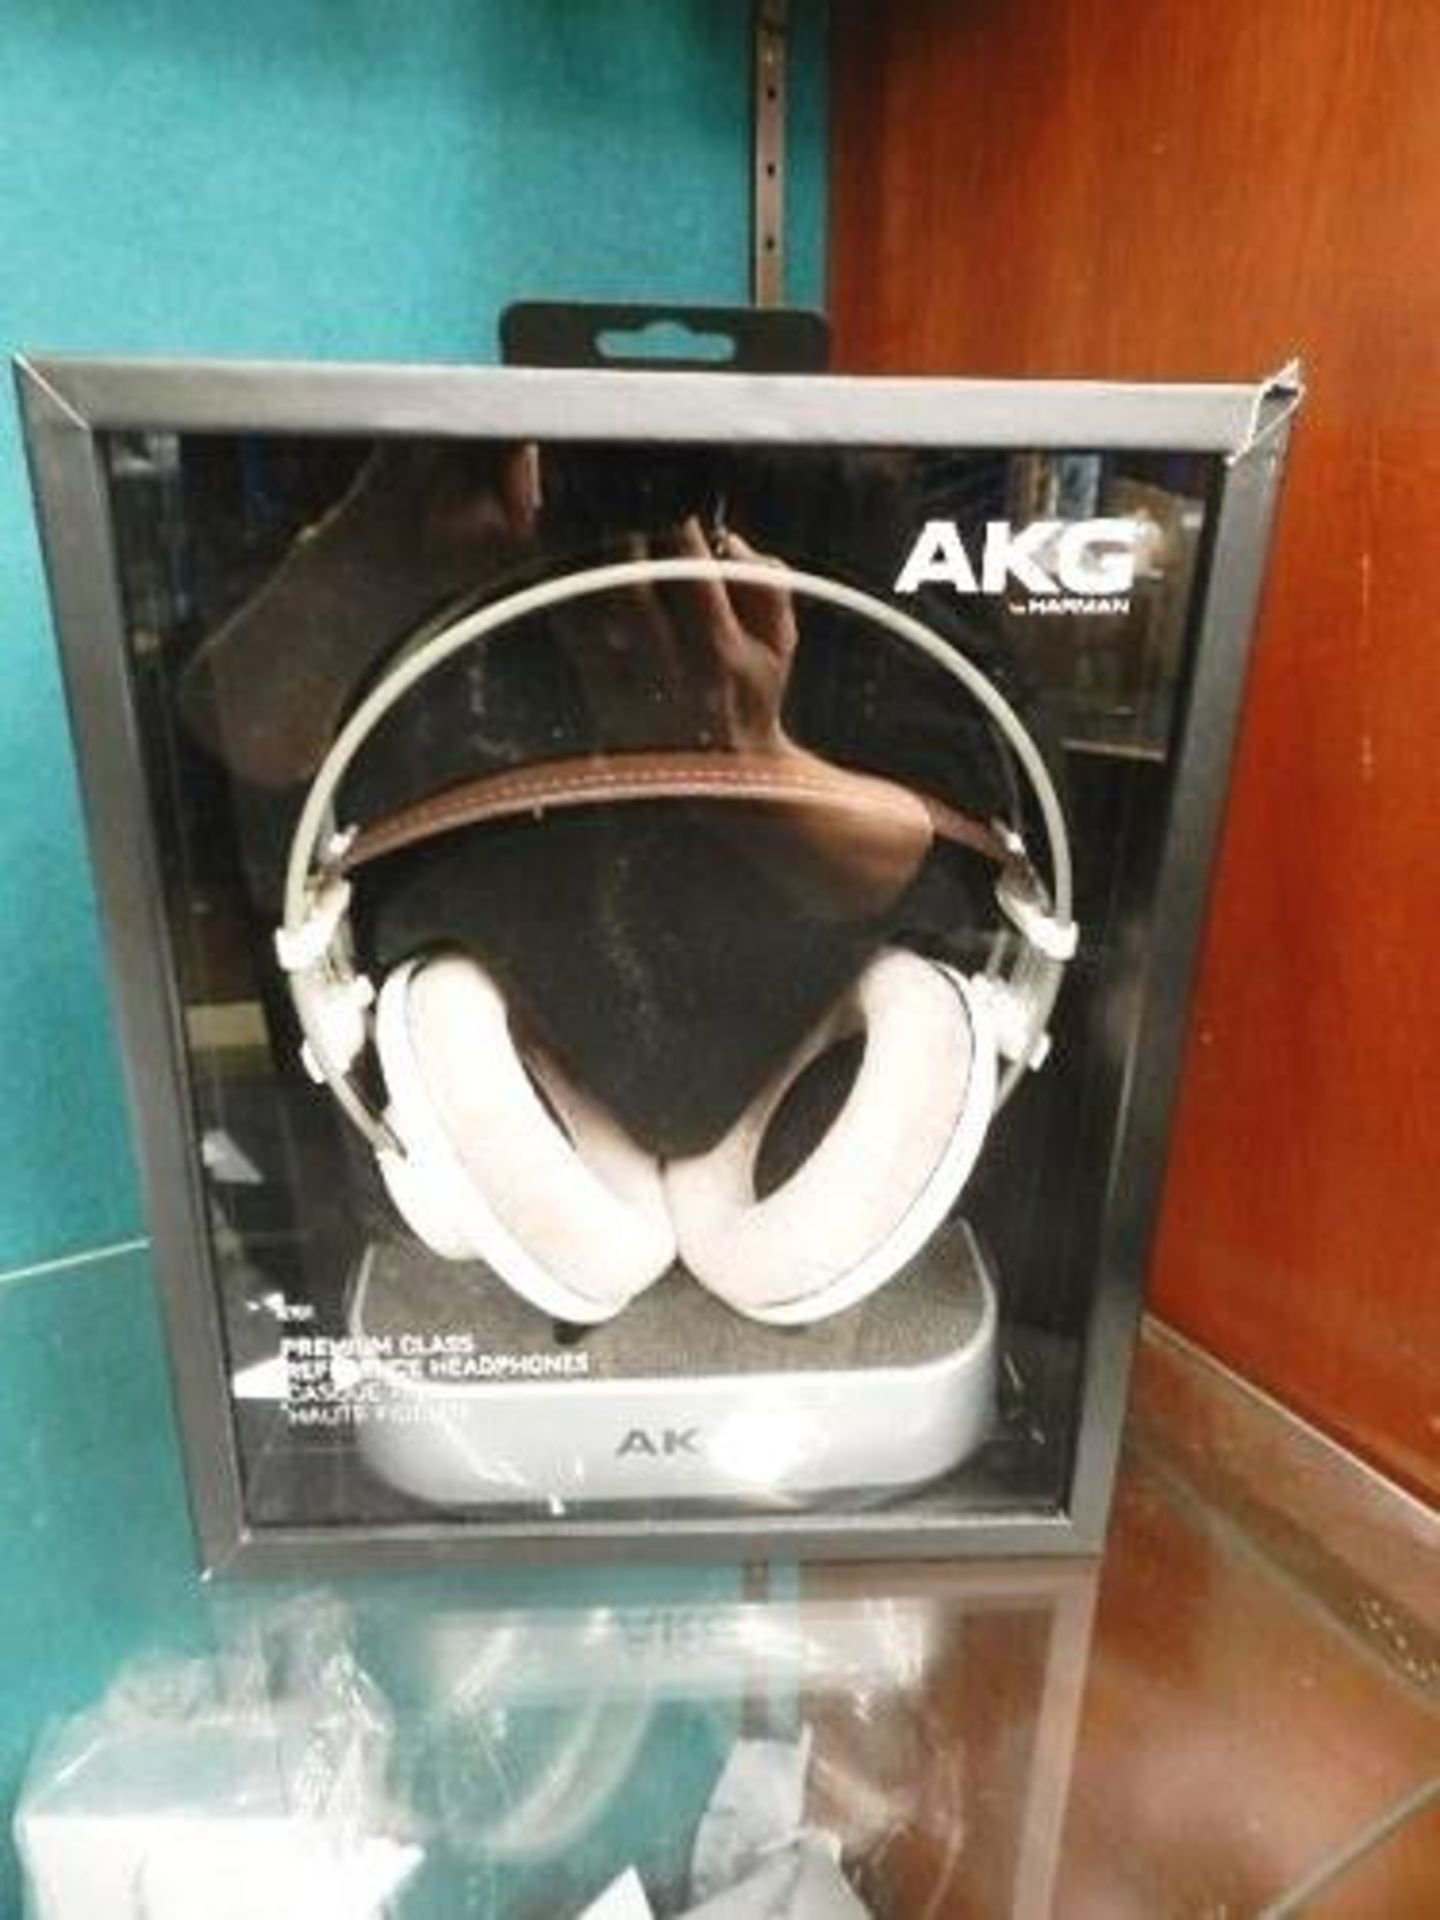 1 x AKG K701 Premium Class headphones - Sealed new in box (C13B)